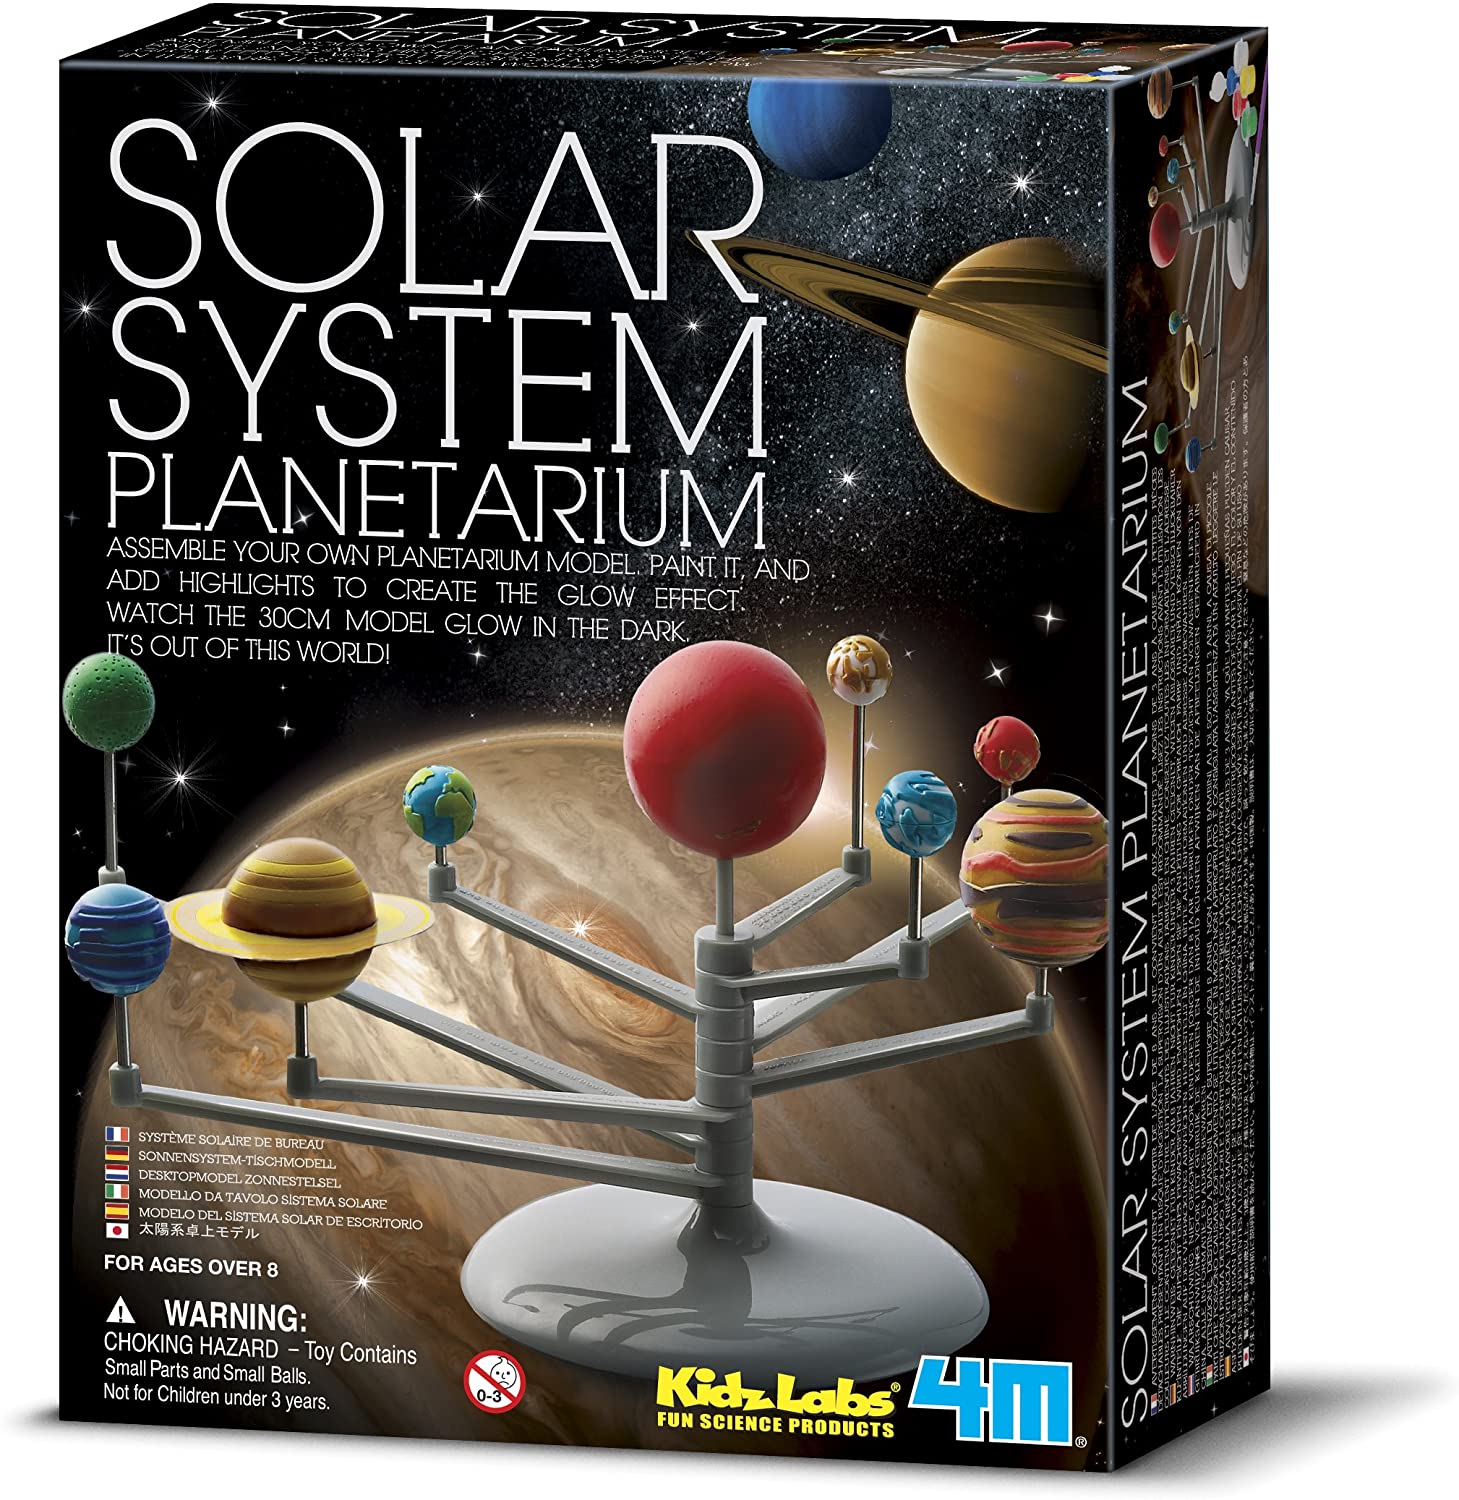 Qiyun 3D Solar System Planetarium Model Learning Science Kits Educational Astronomy Model DIY Toy Gift